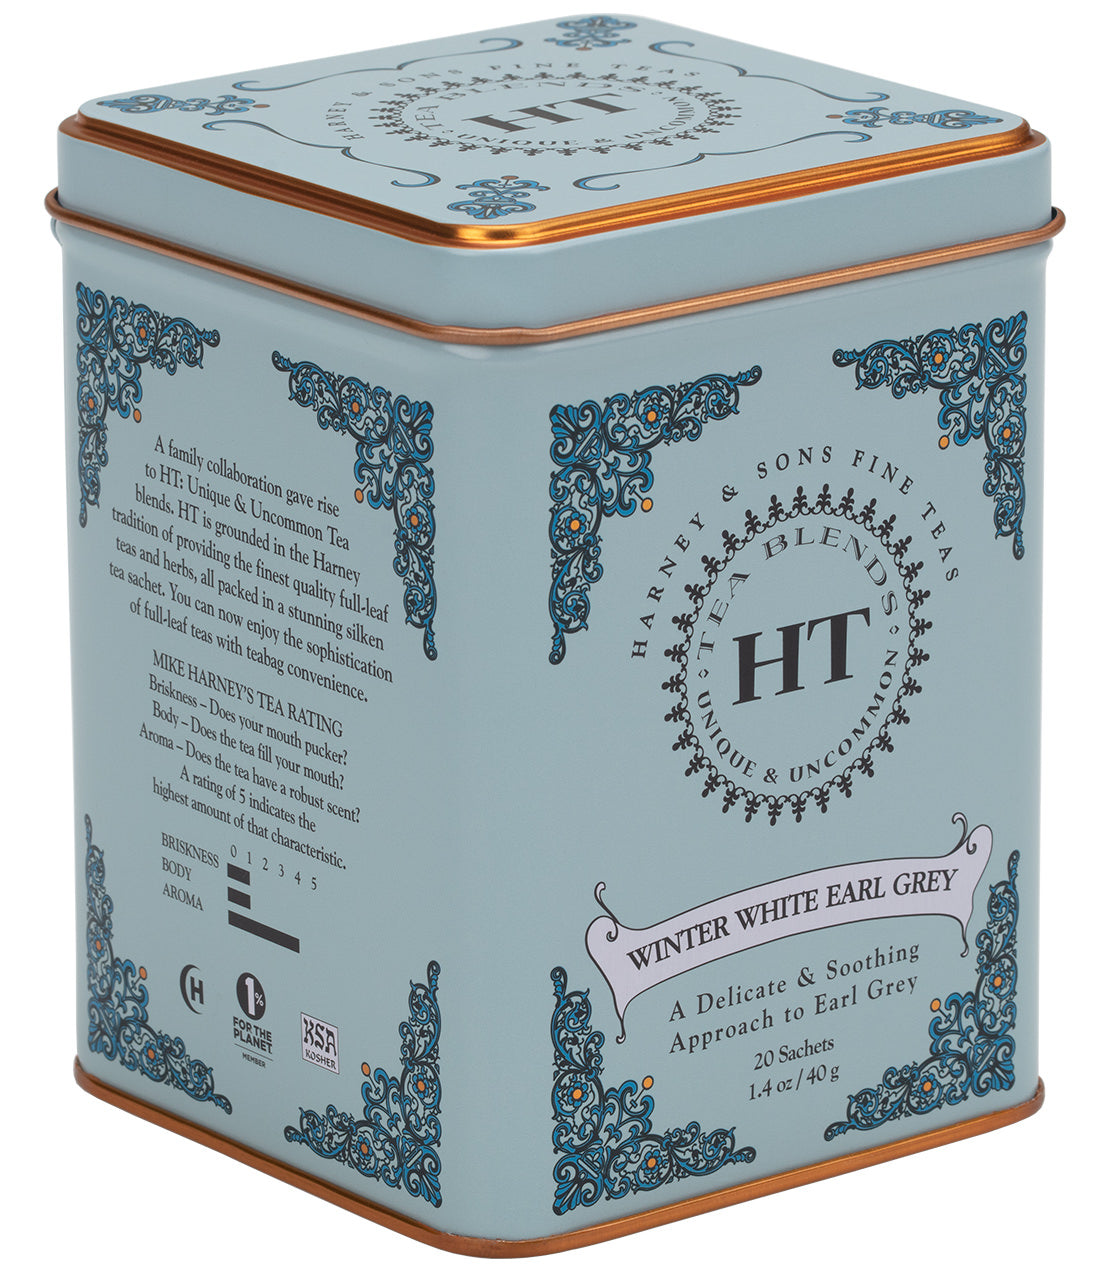 Winter White Earl Grey - Flavored White Tea - Harney u0026 Sons Fine Teas